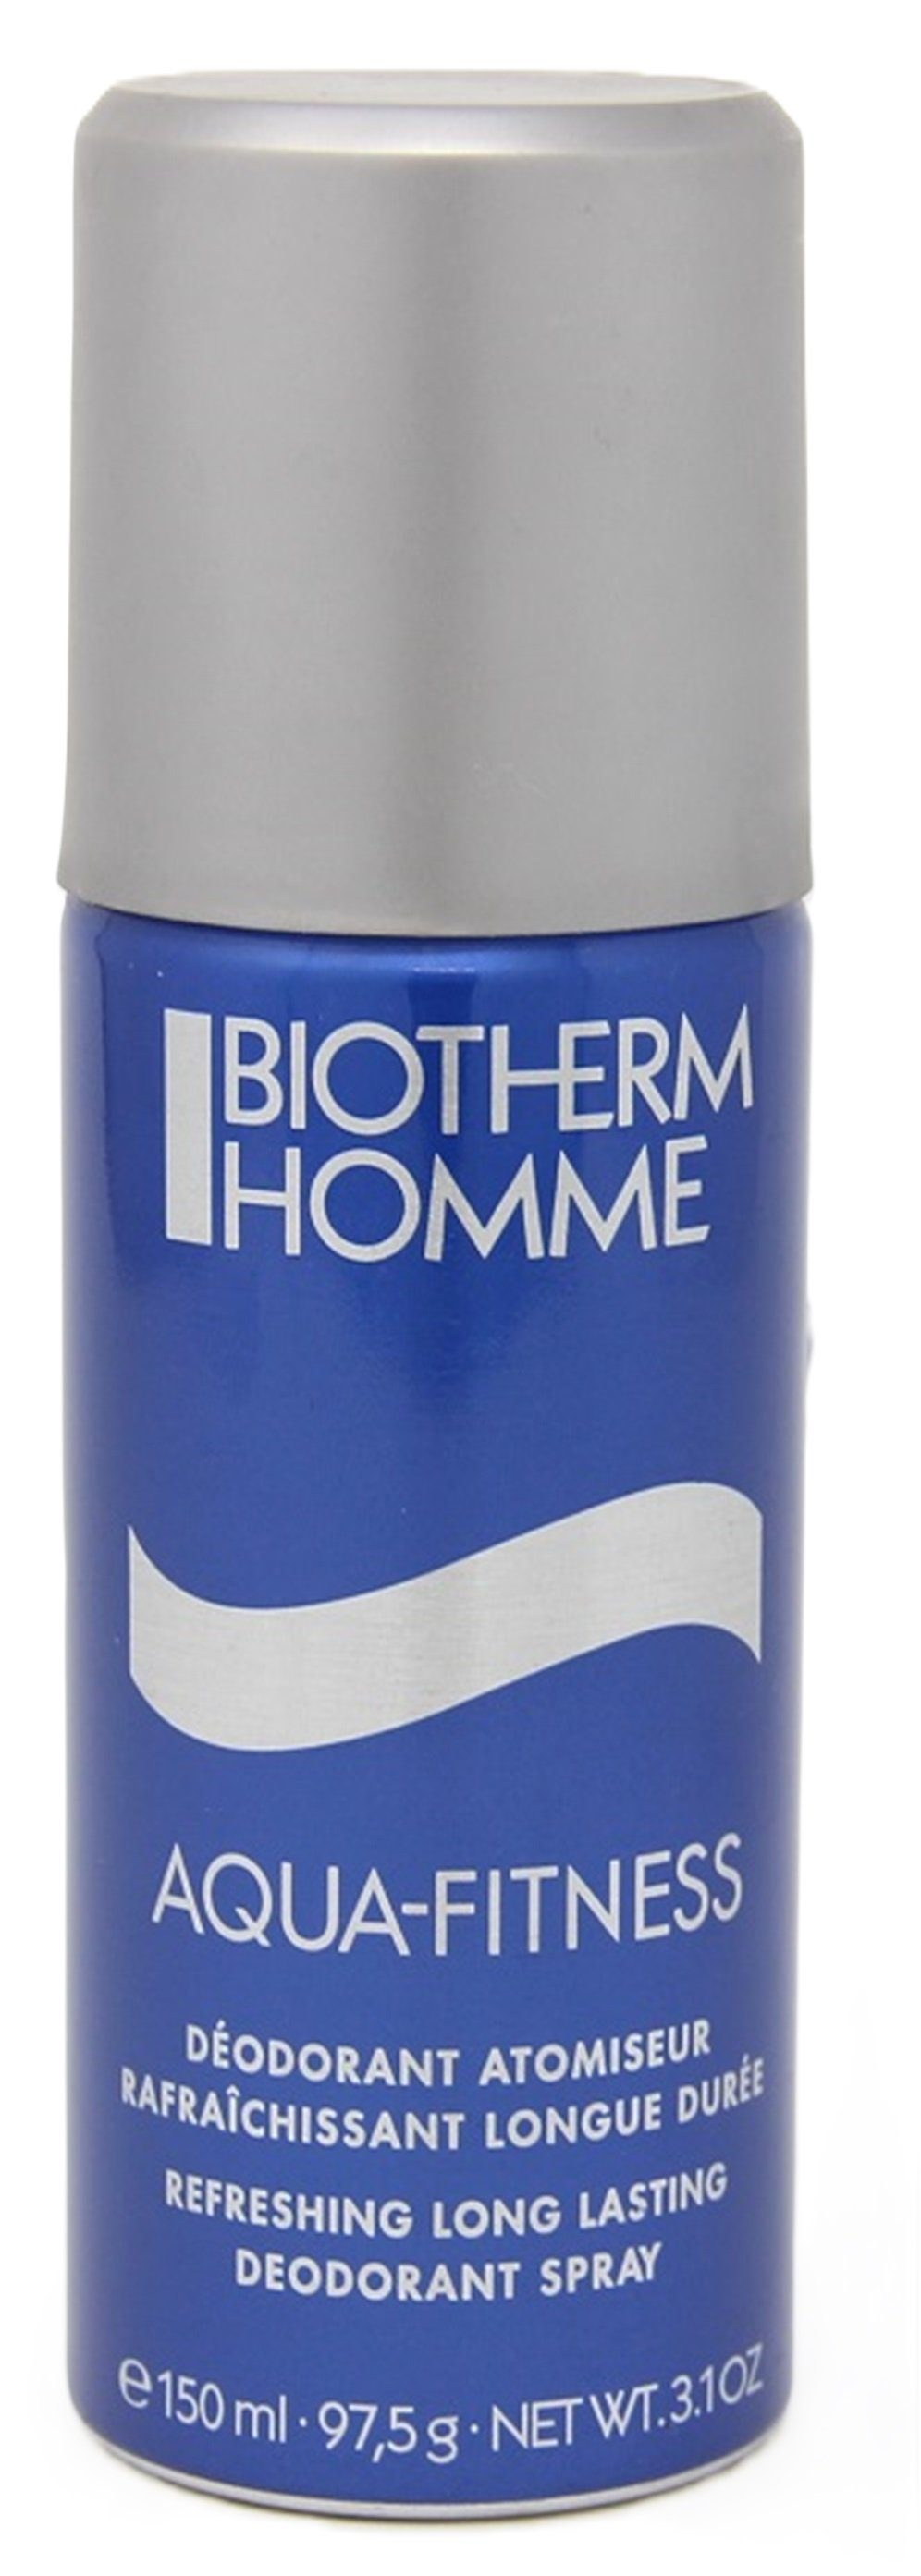 Ist in Mode BIOTHERM Deo-Spray Deodorant 150ml Biotherm Spray Fitness Aqua Homme